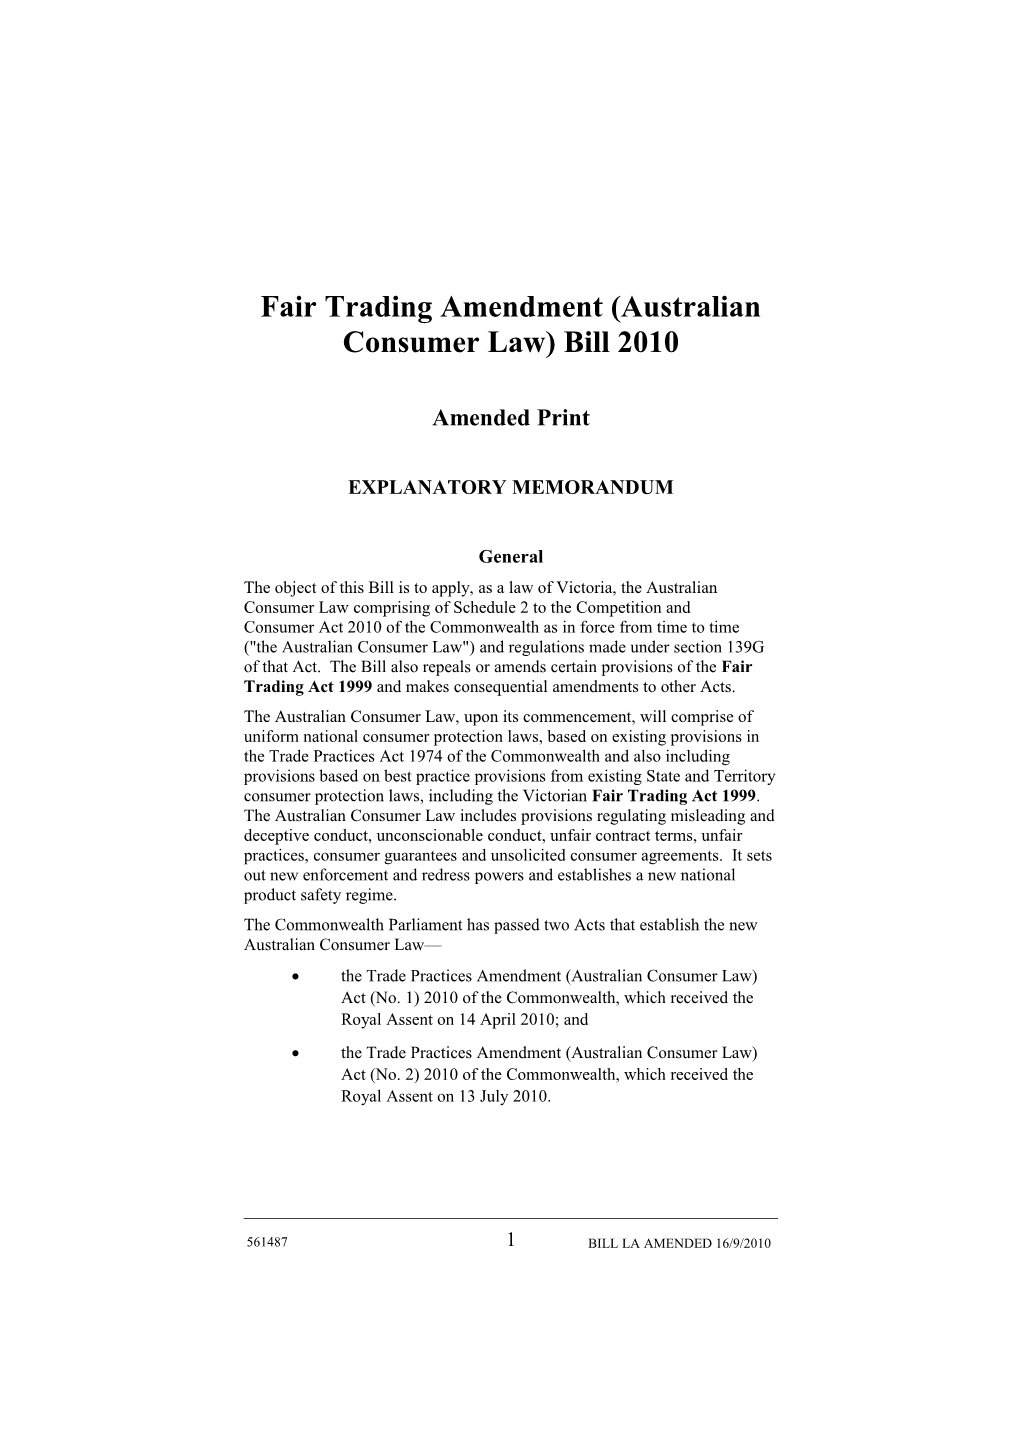 Fair Trading Amendment (Australian Consumer Law) Bill 2010